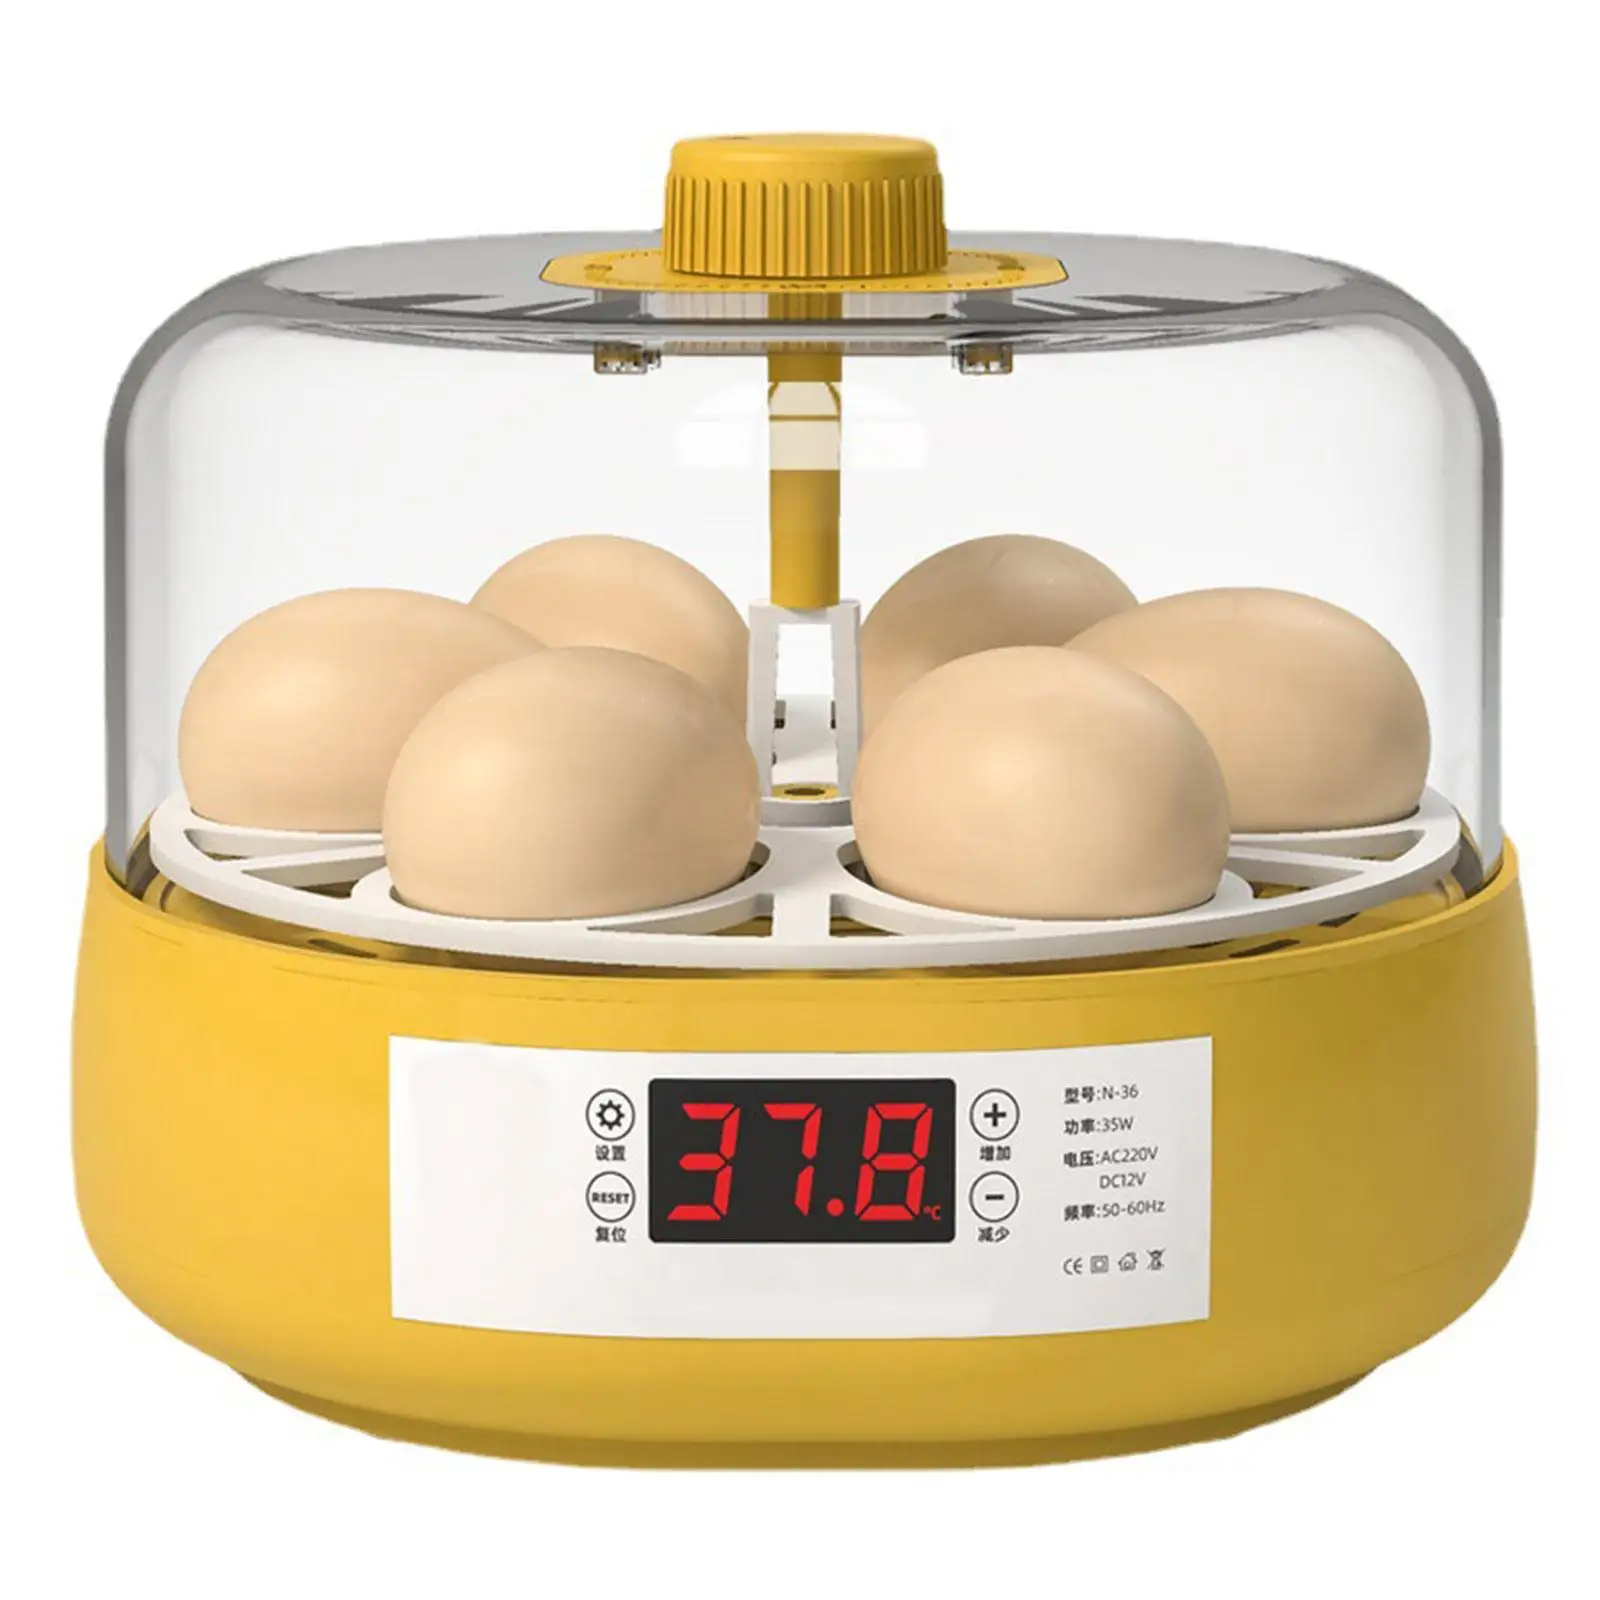 Egg Incubator Egg Turner Temperature Control Egg Hatcher Machine for Chicken Quail Birds